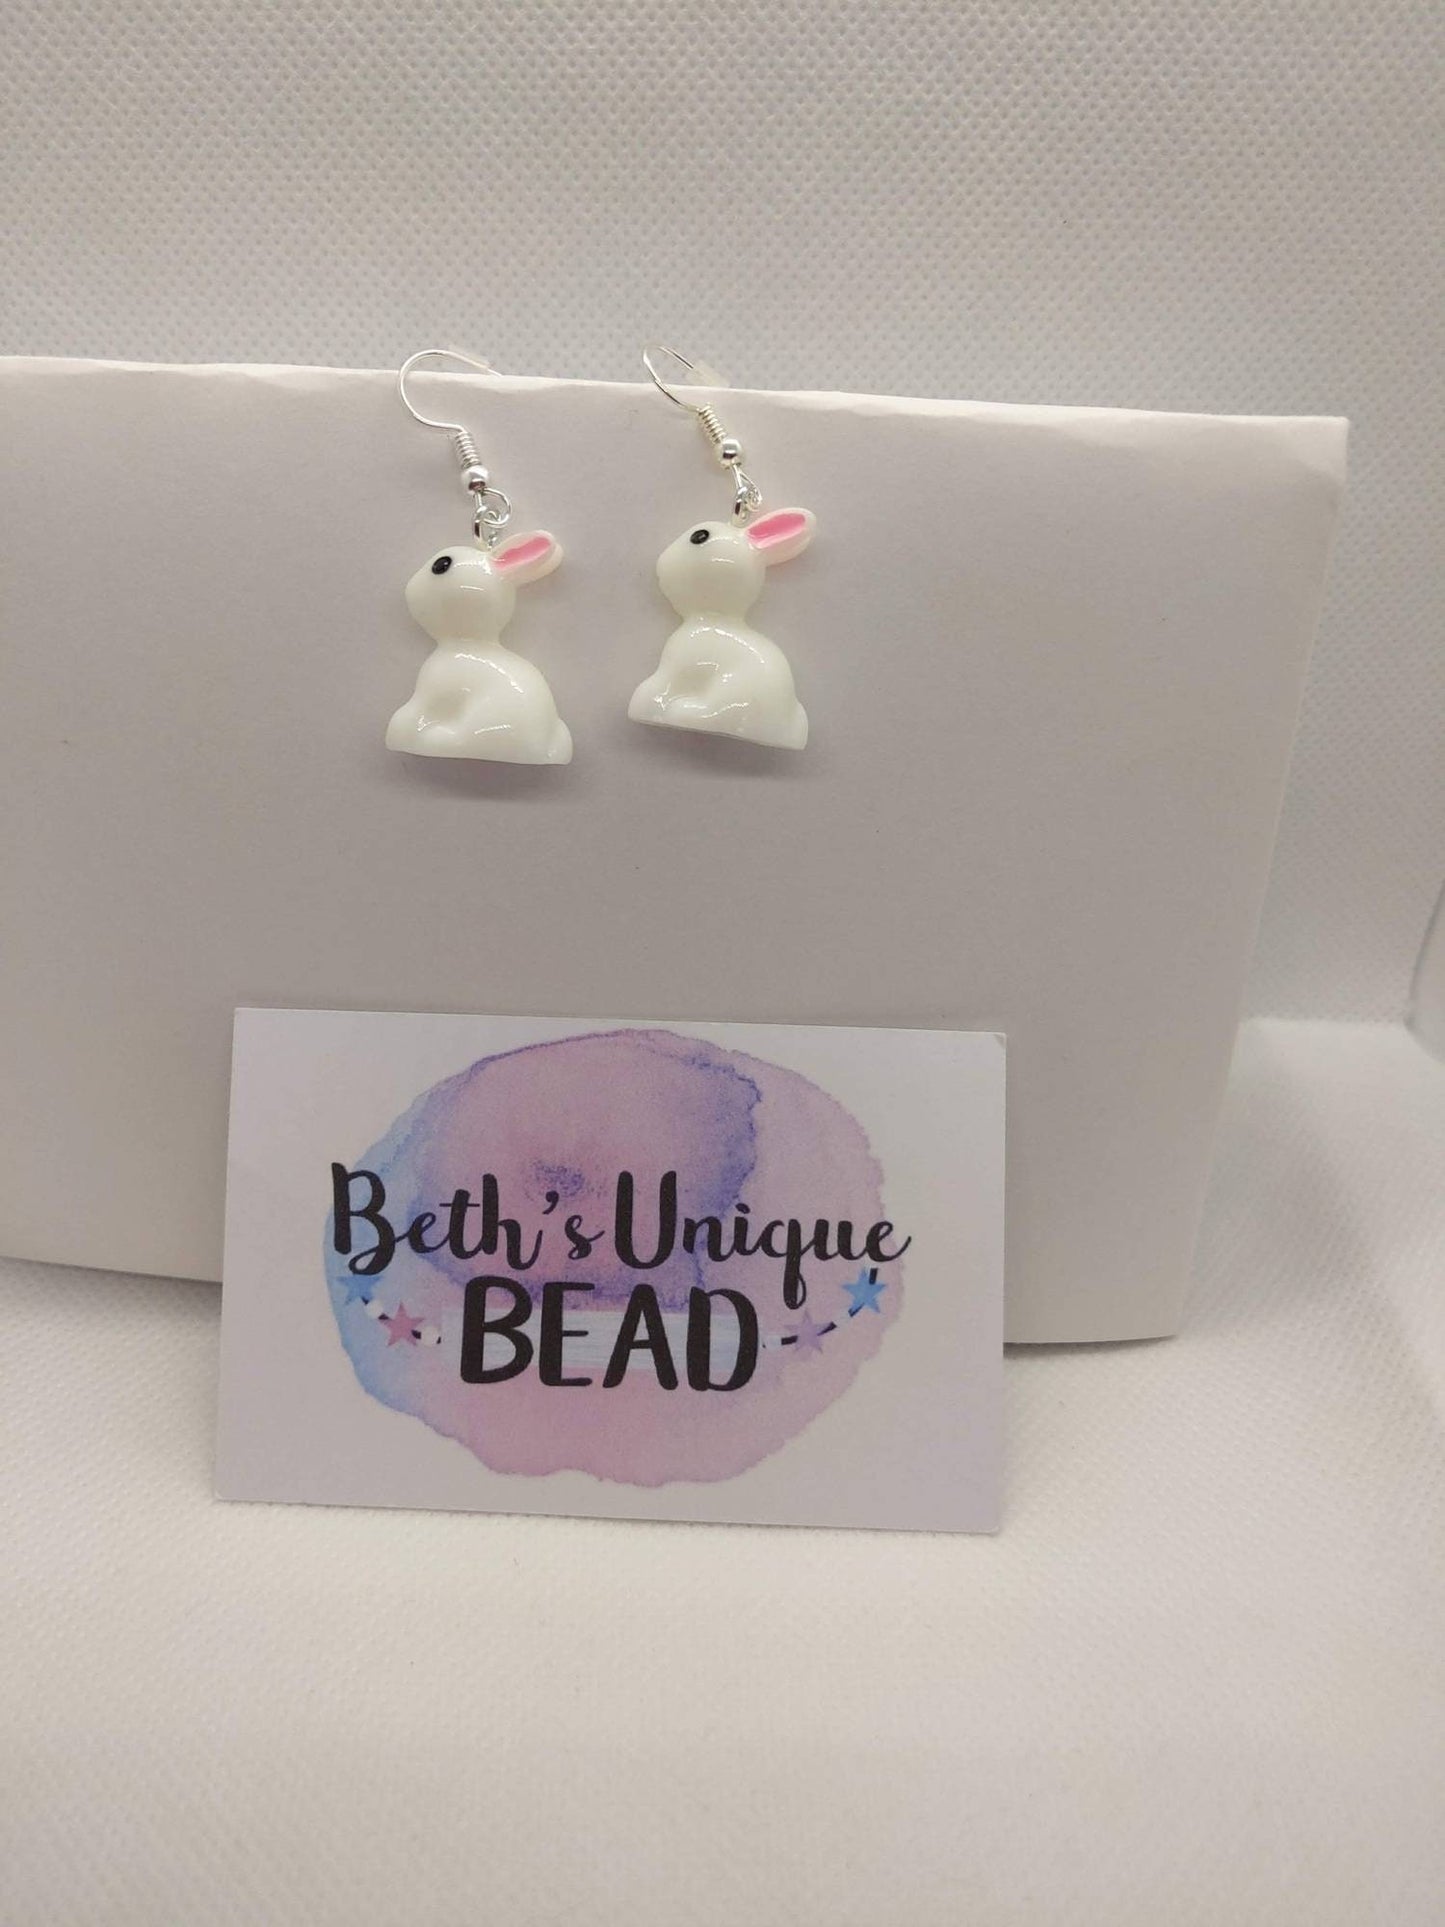 Bunny earrings, rabbit jewelry, novelty earrings, white rabbit, sitting bunny